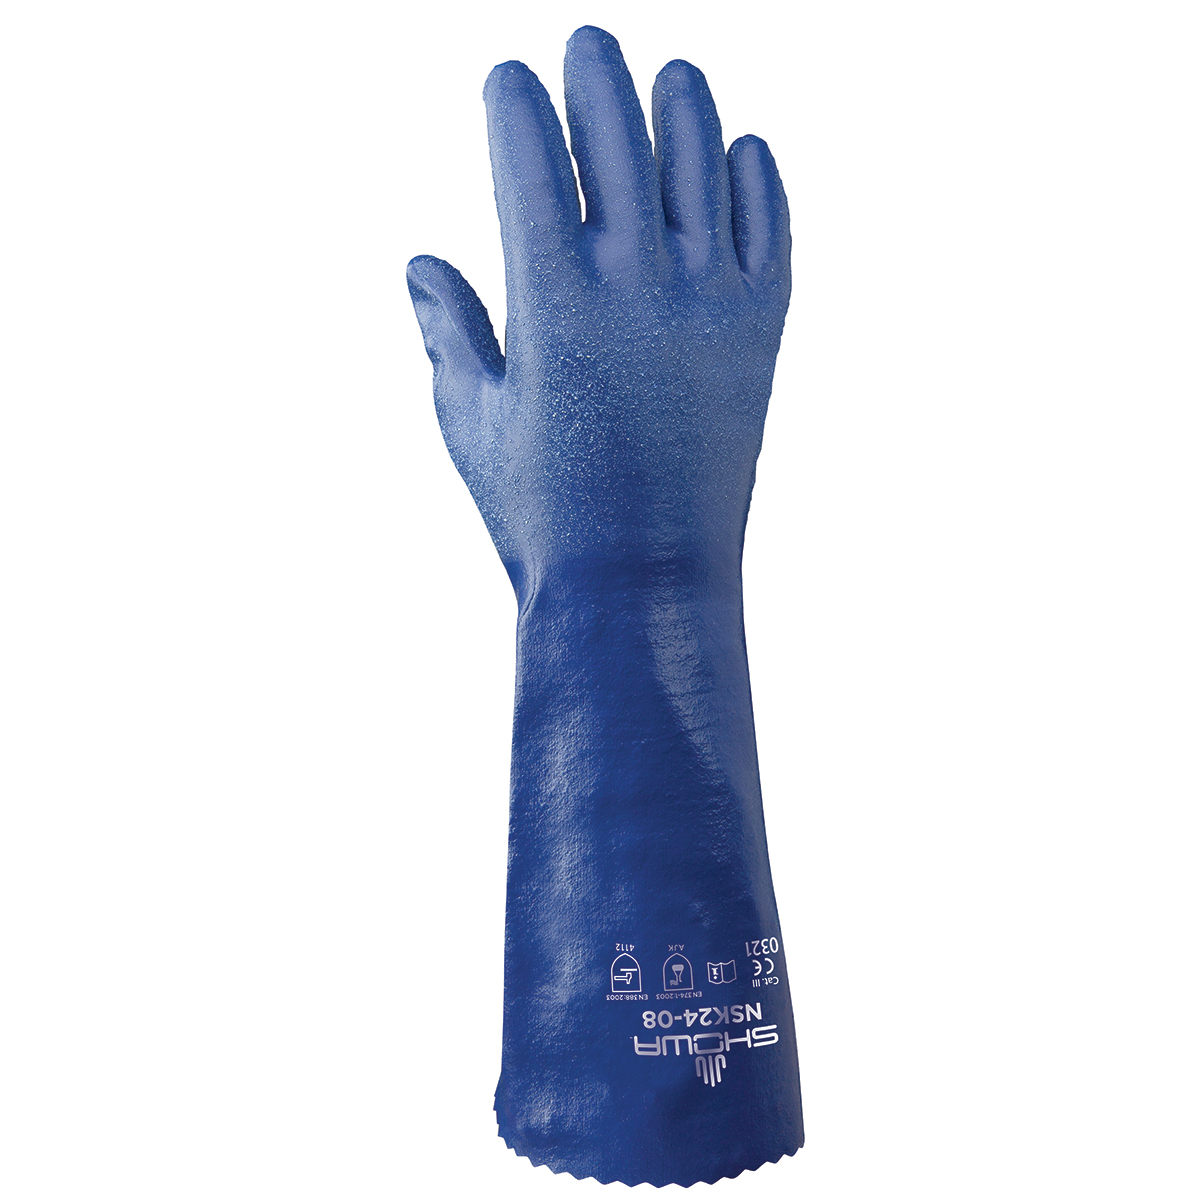 Chemical resistant nitrile, fully coated 14" gauntlet, royal blue, rough finish, interlock liner, large